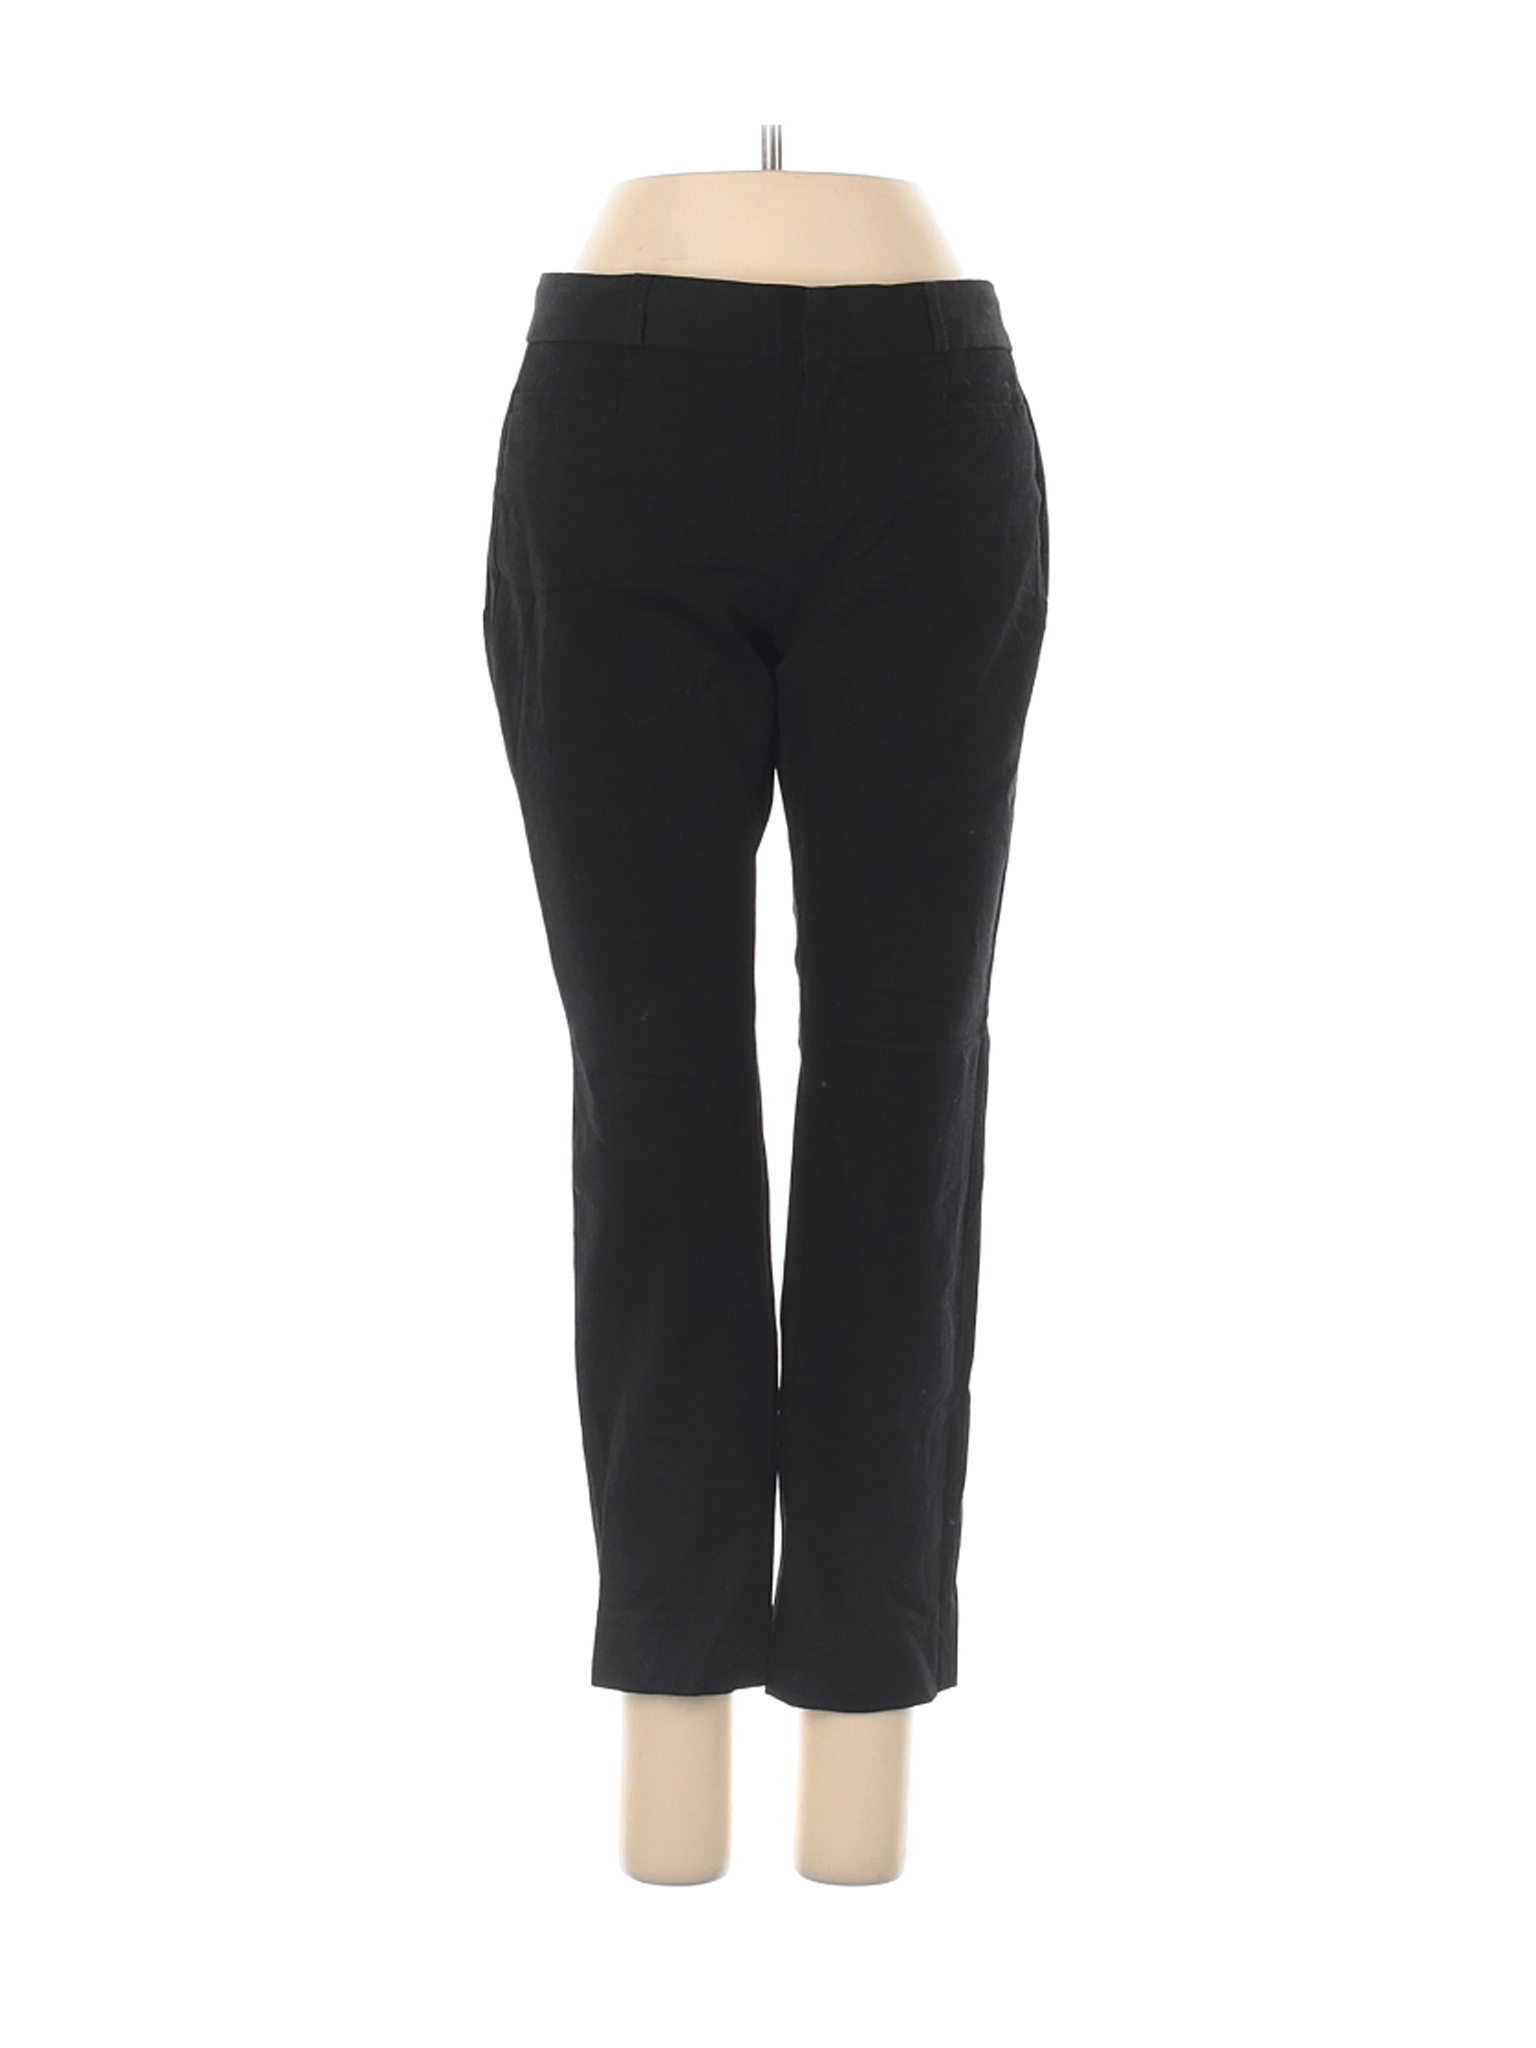 Banana Republic Factory Store Women Black Dress Pants 0 Petites | eBay